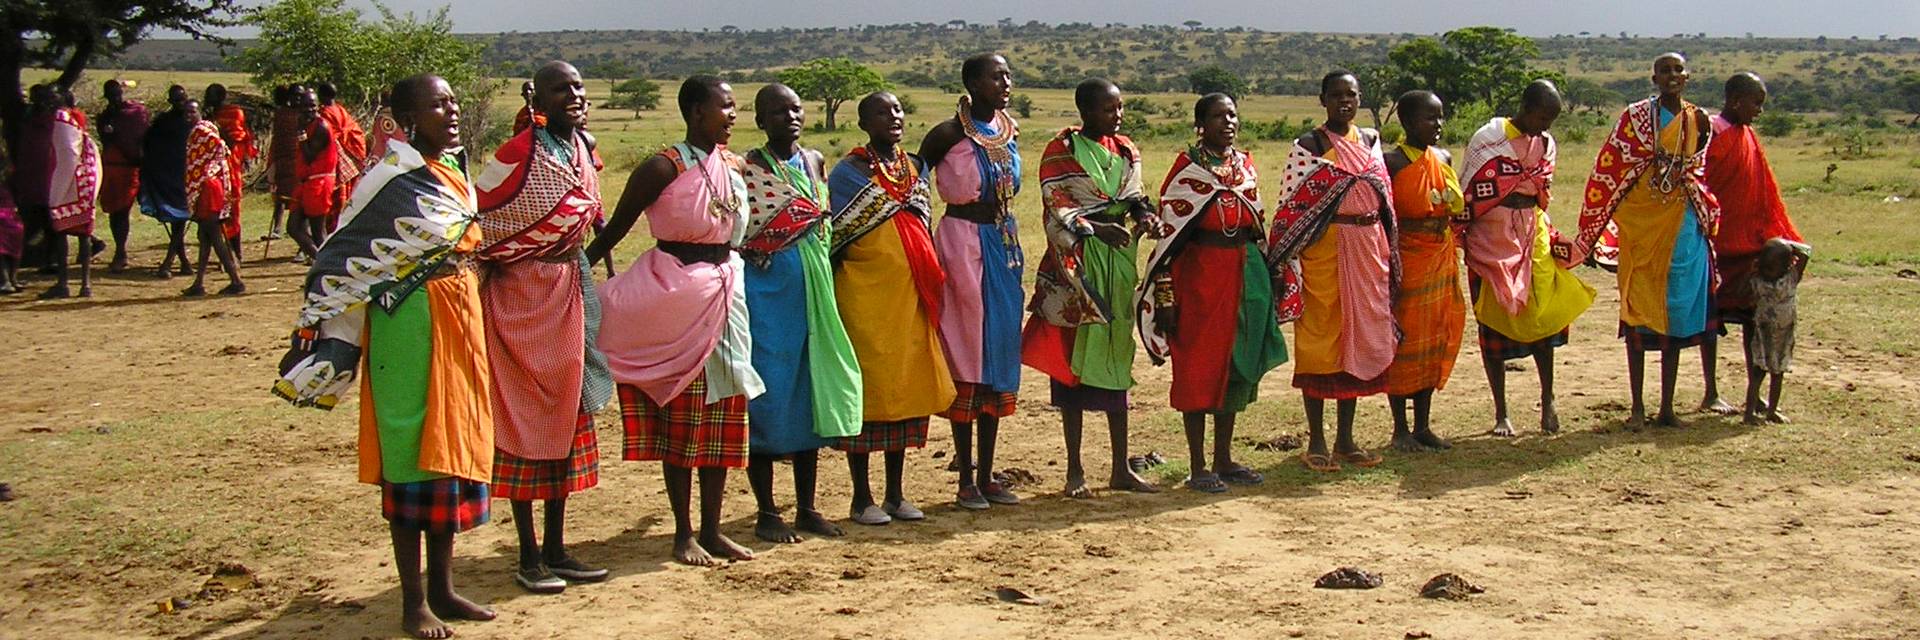 Safari Adventures in Maasai Mara, Kenya